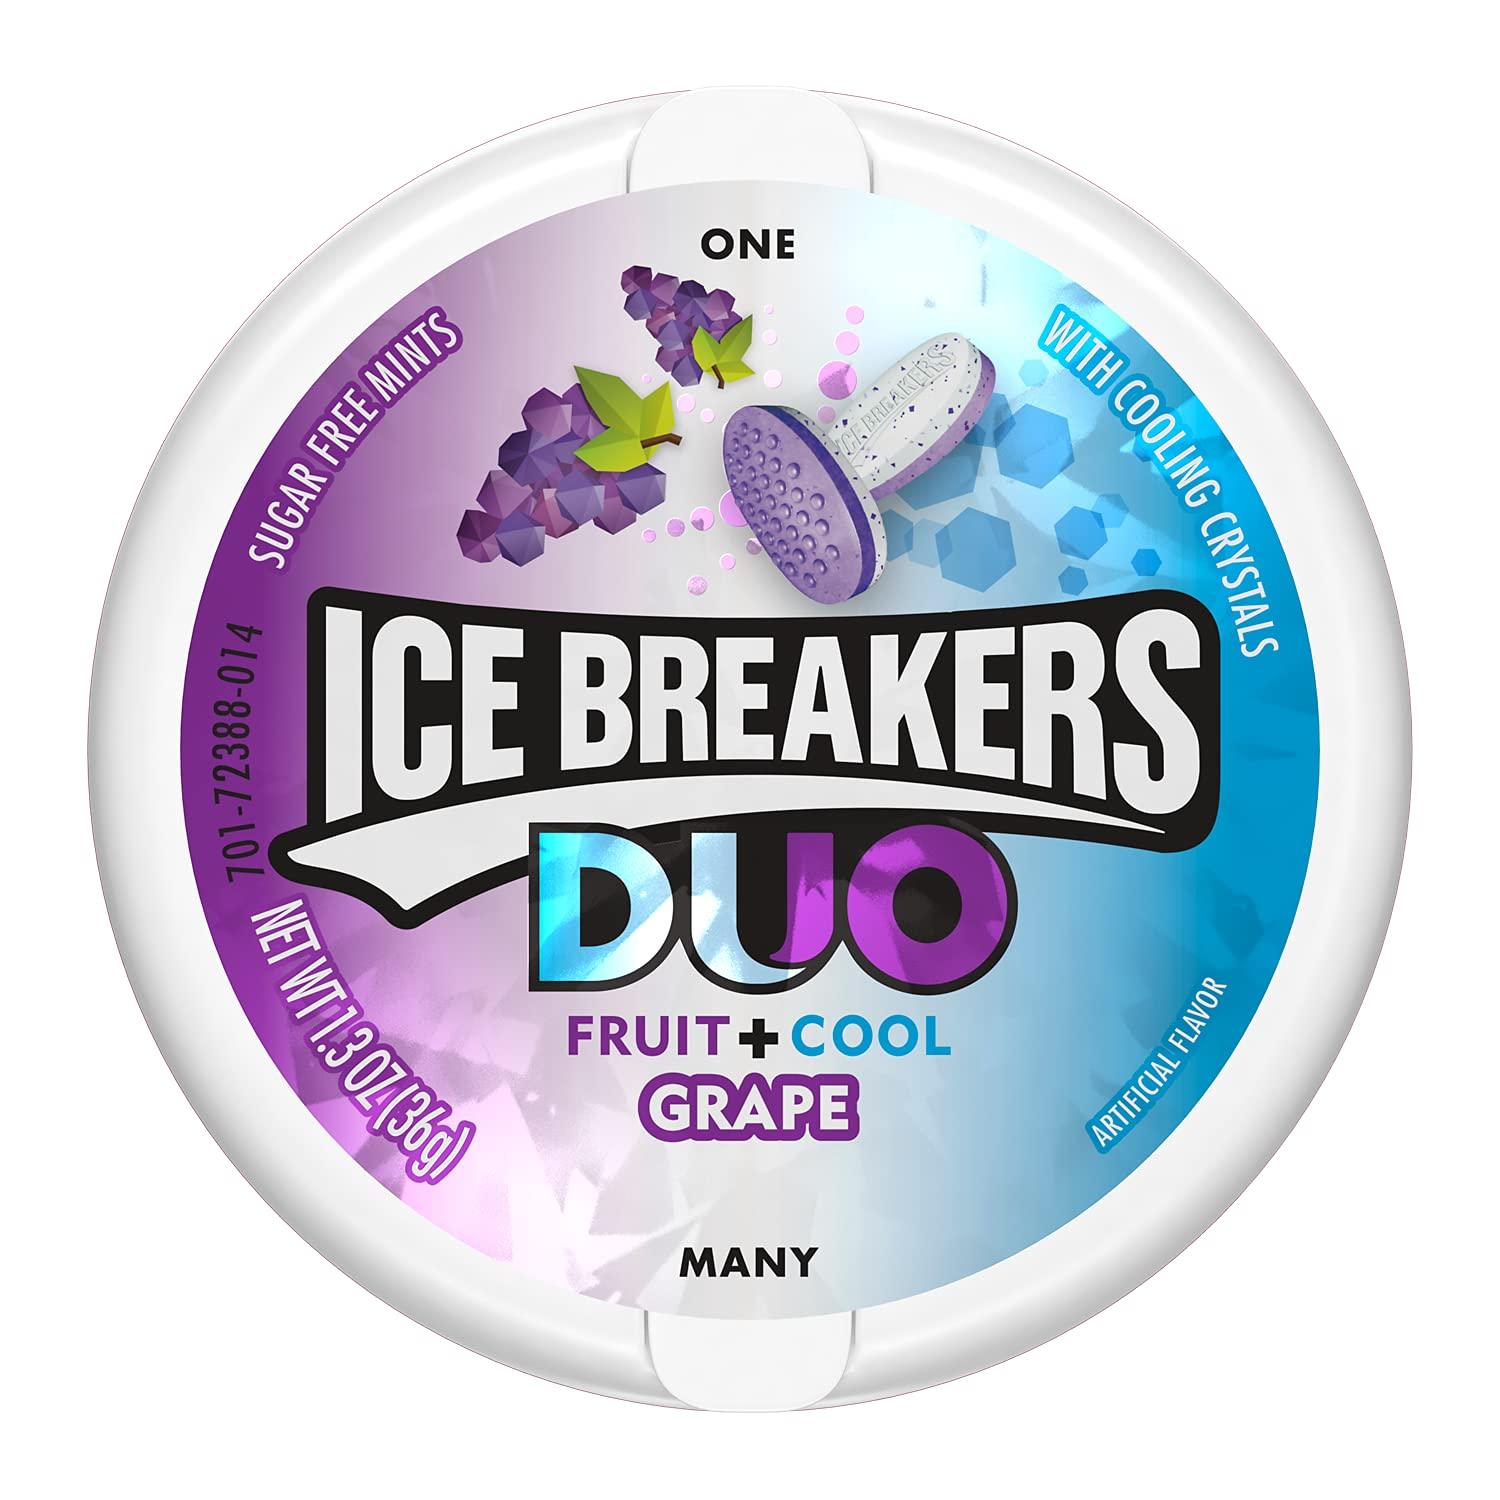 Prime Lemonade X Ice Breakers Duo Mints Strawberry, Watermelon and grape